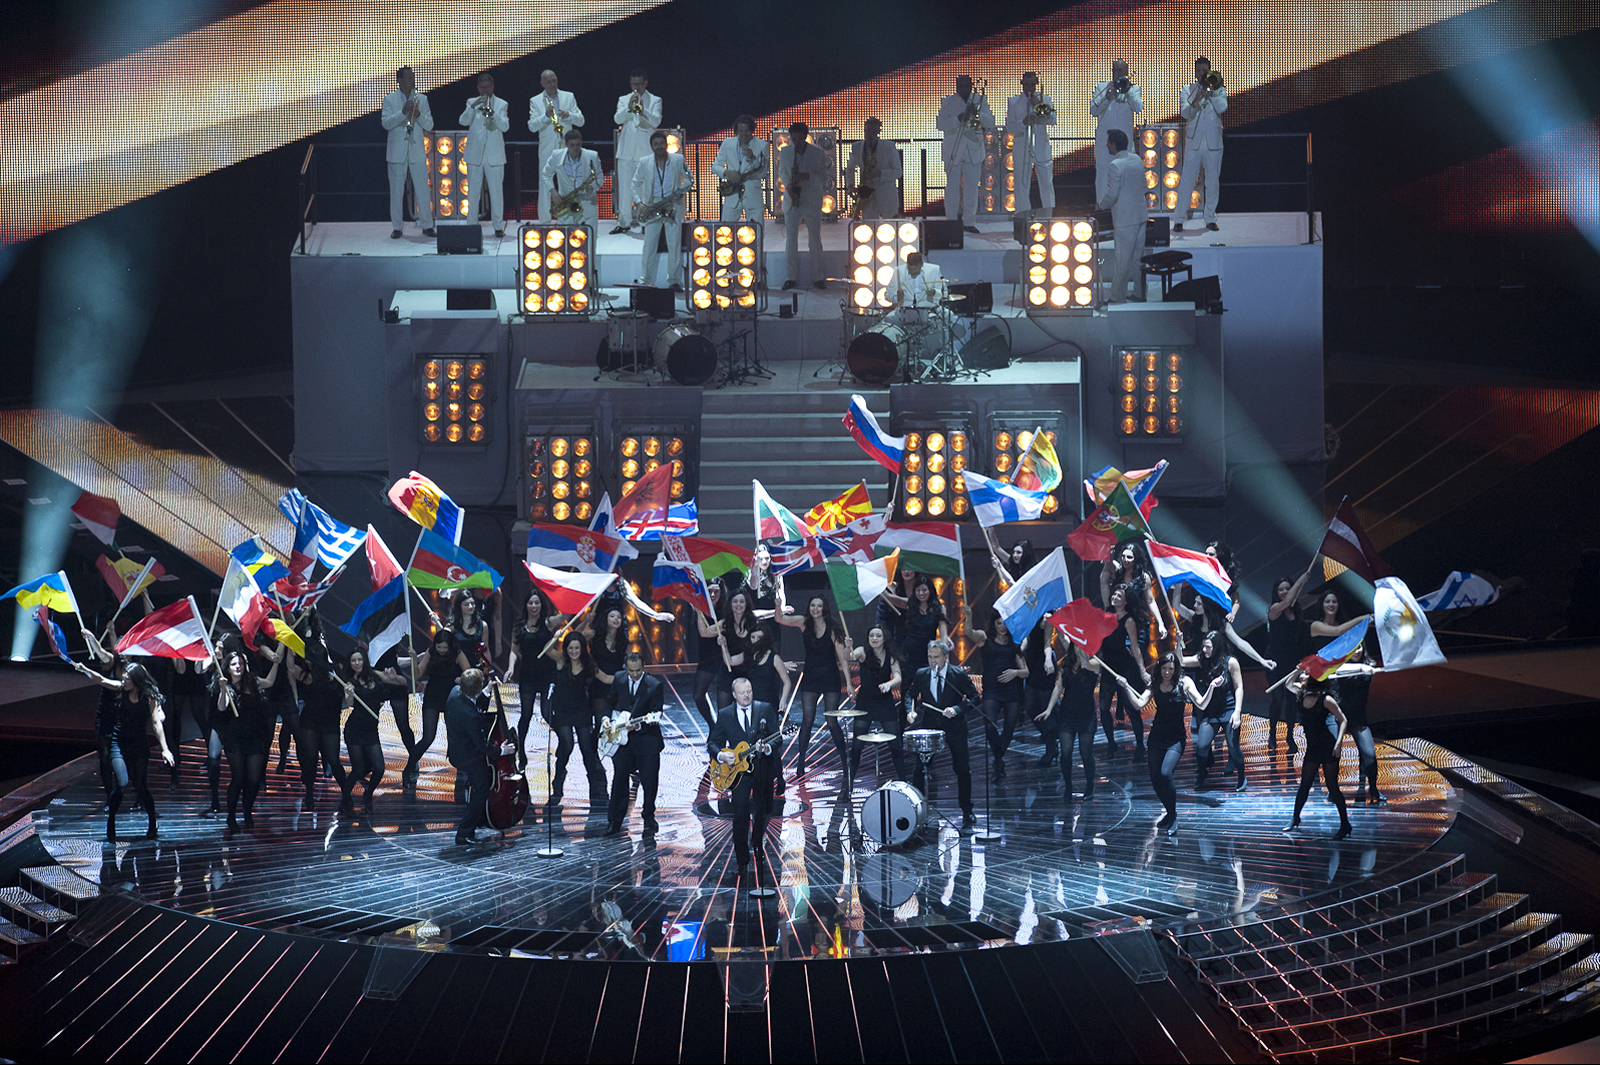 Opening Eurovision act in Düsseldorf in 2011